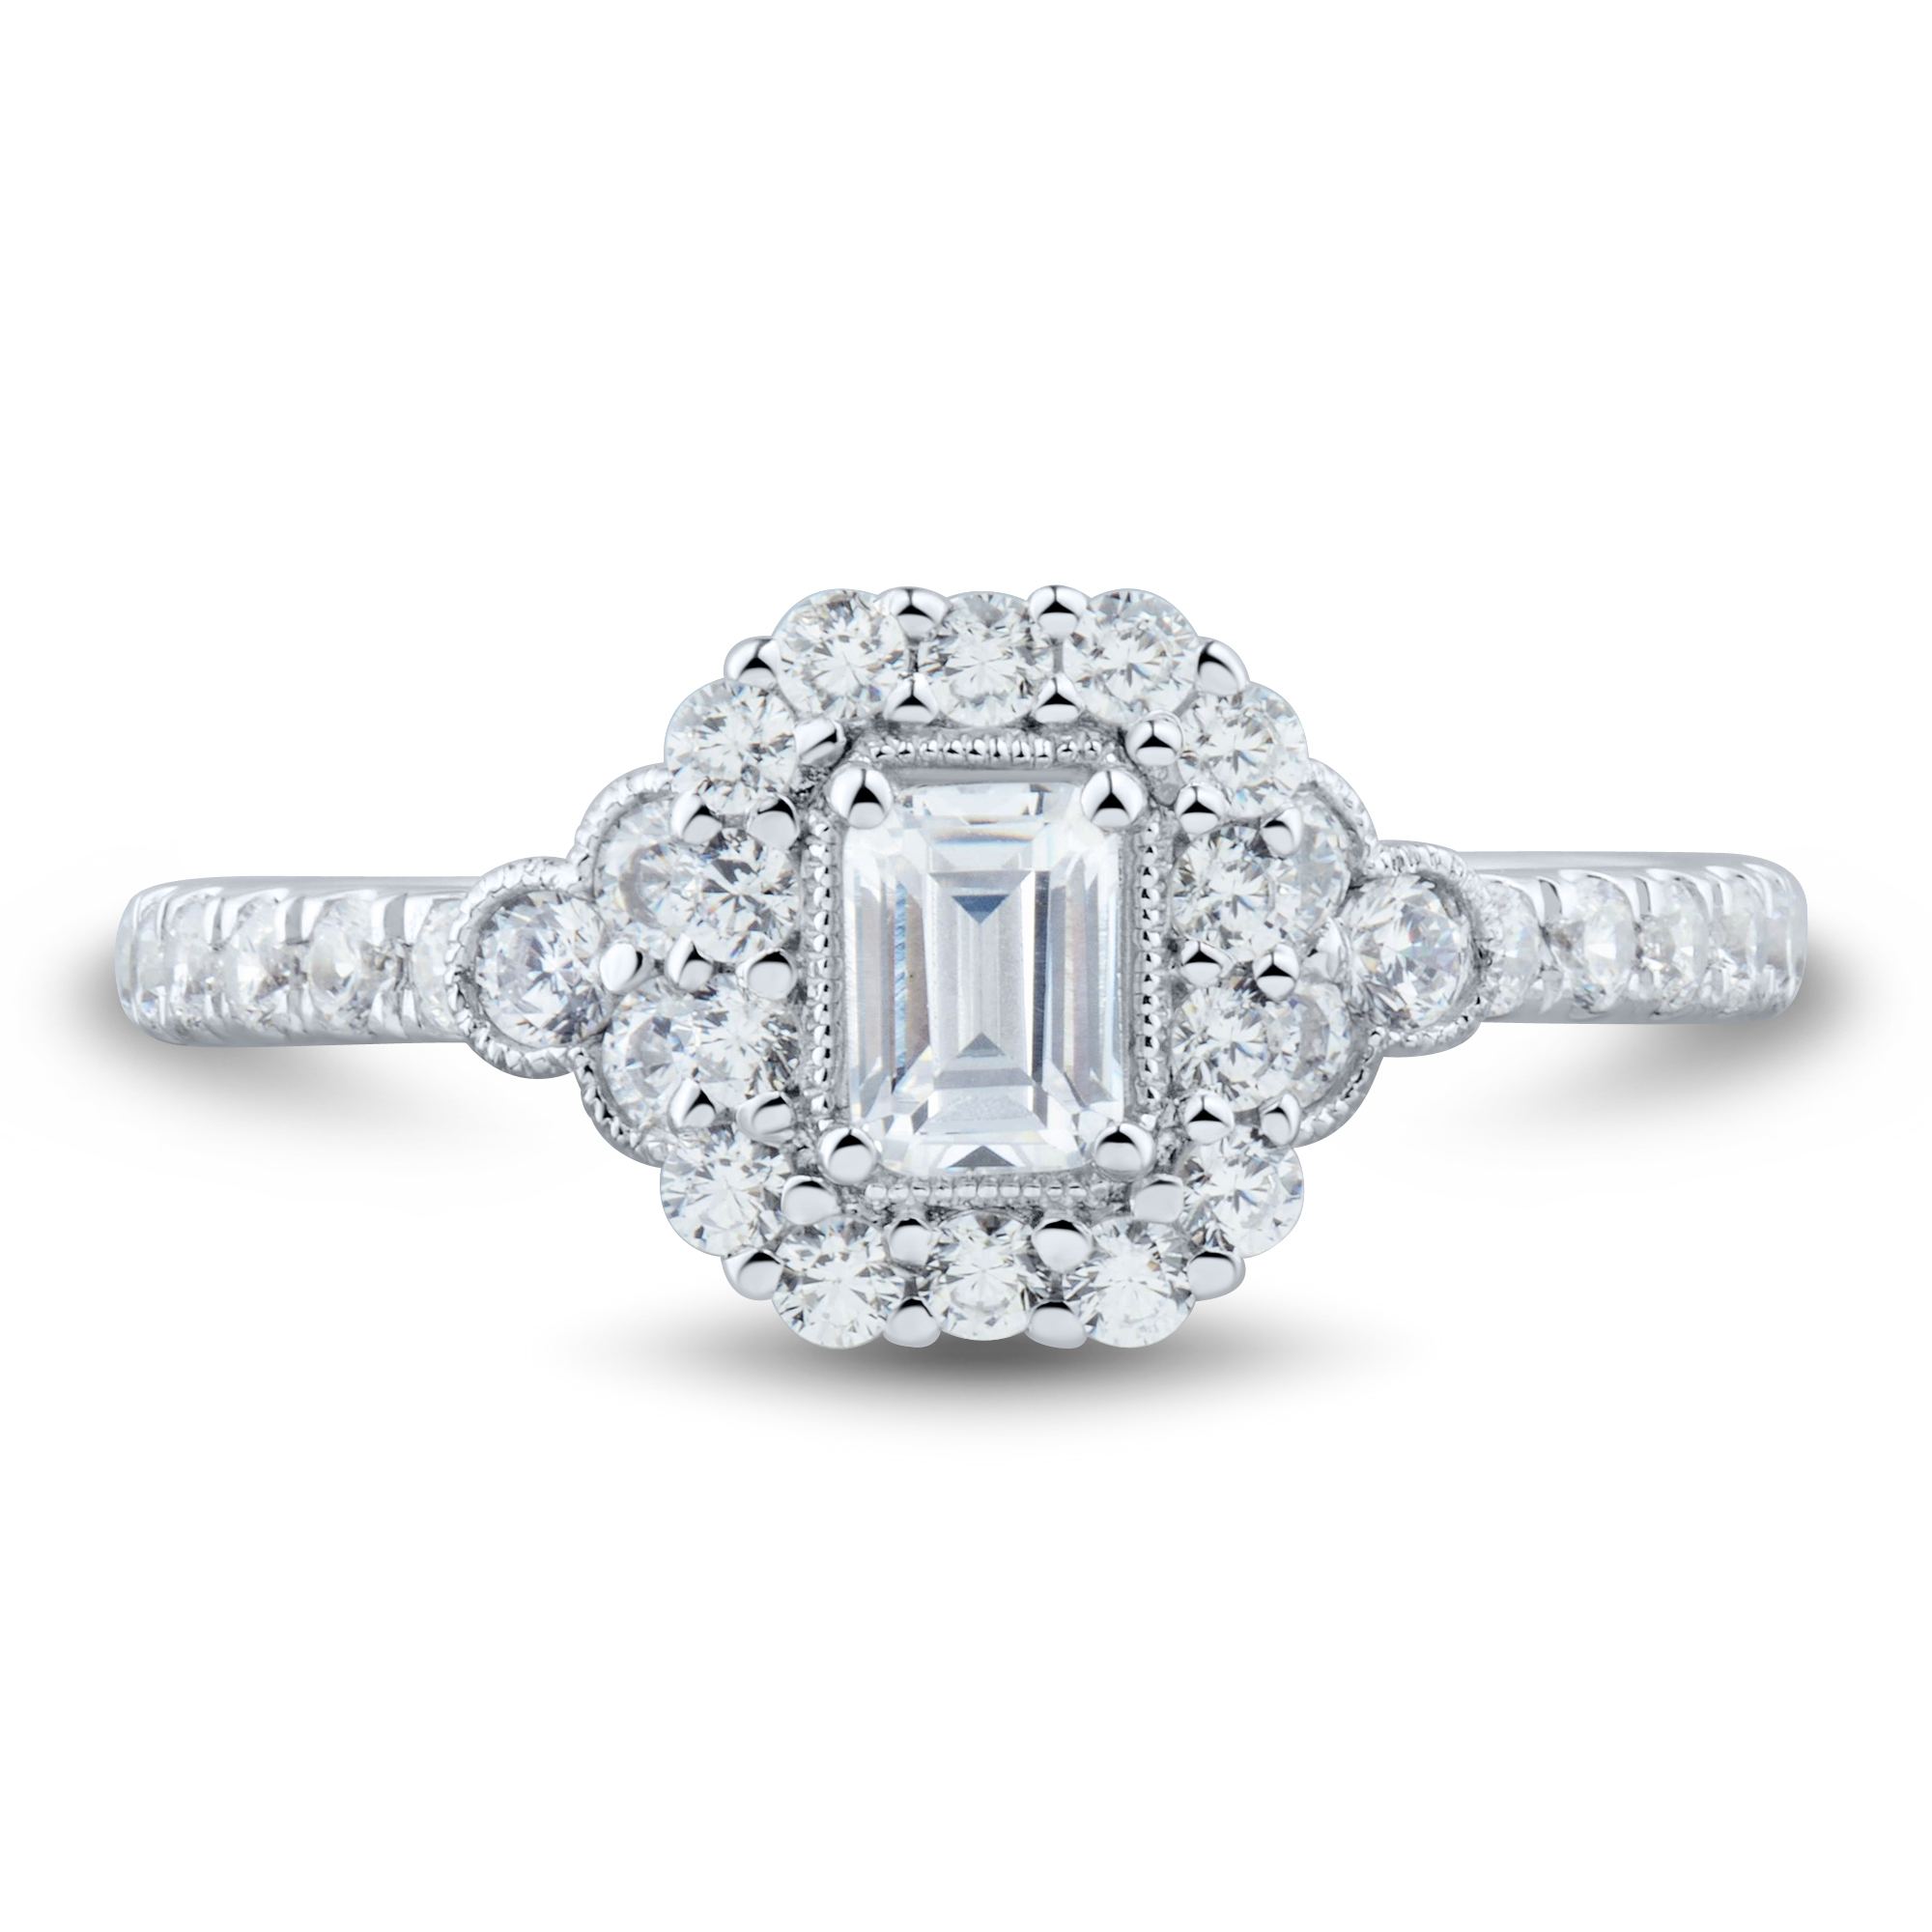 Helzberg Signature Emerald-Cut Halo Engagement Ring